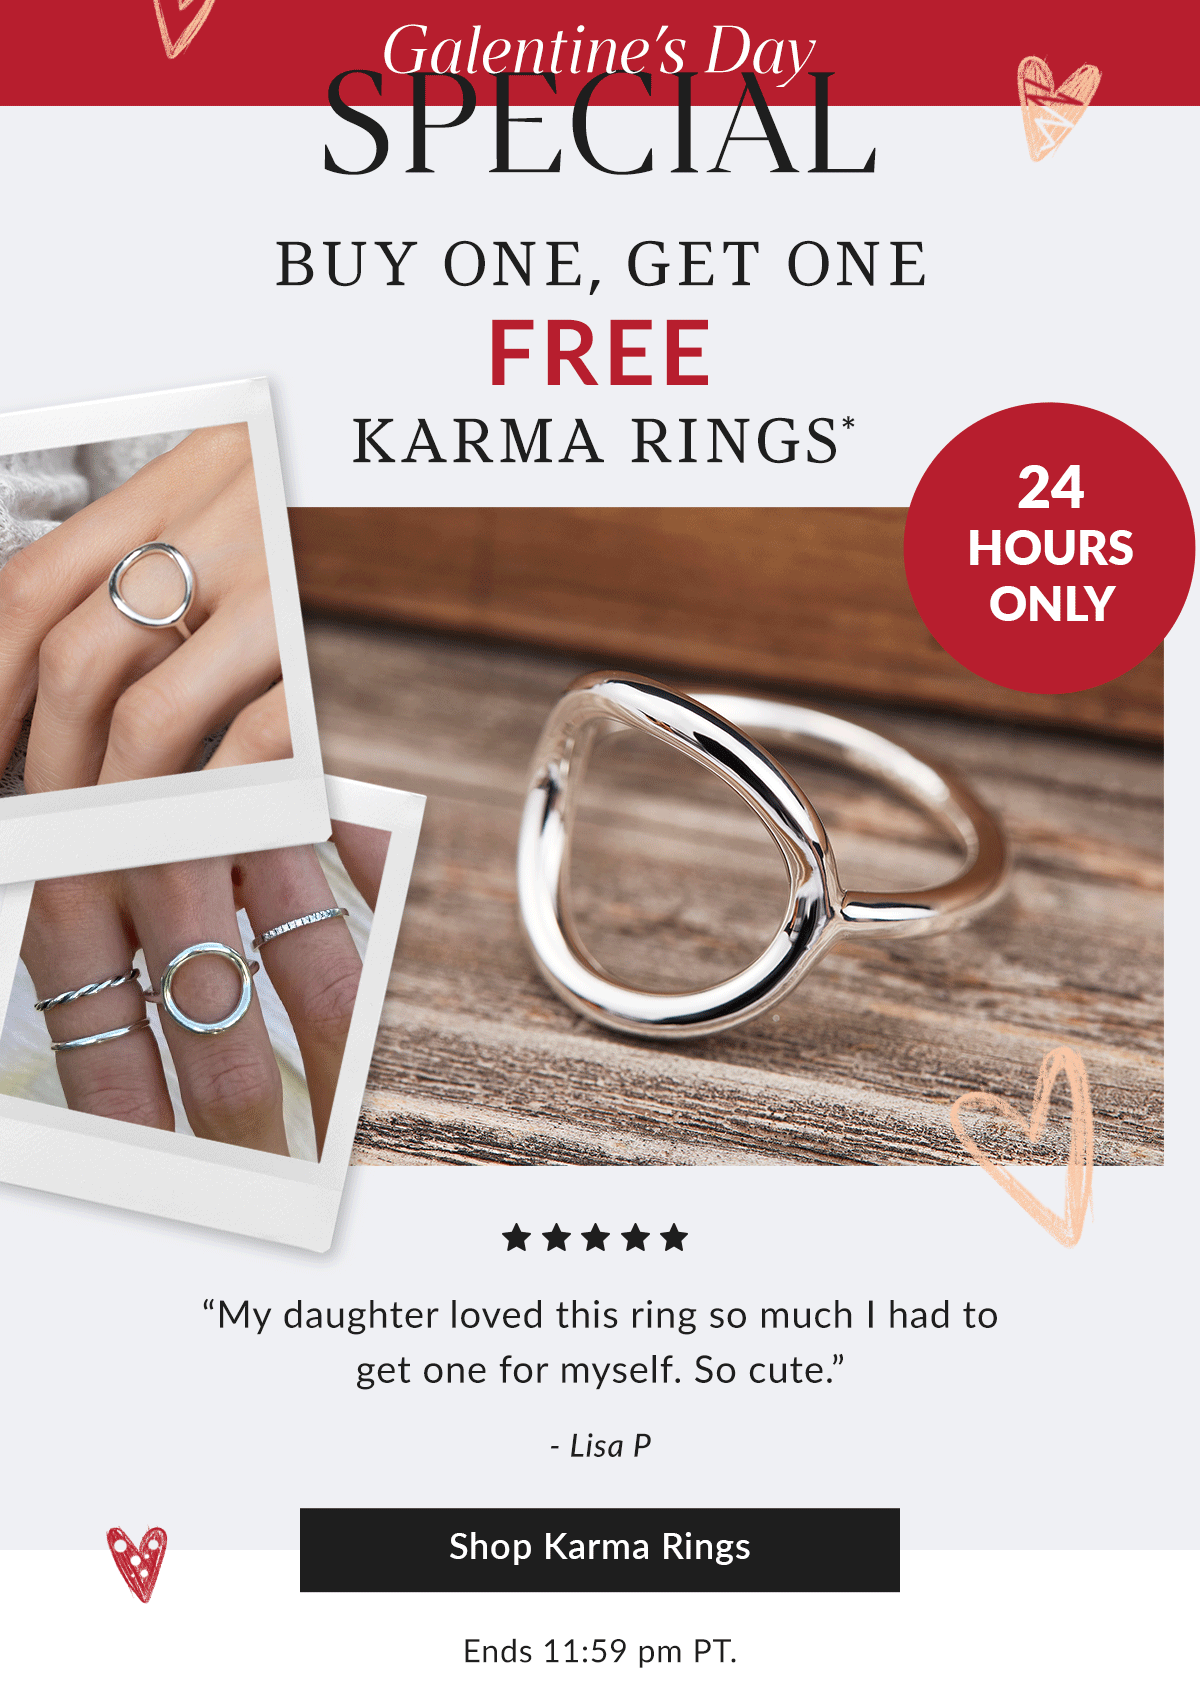 BOGO Free Silver Karma Rings